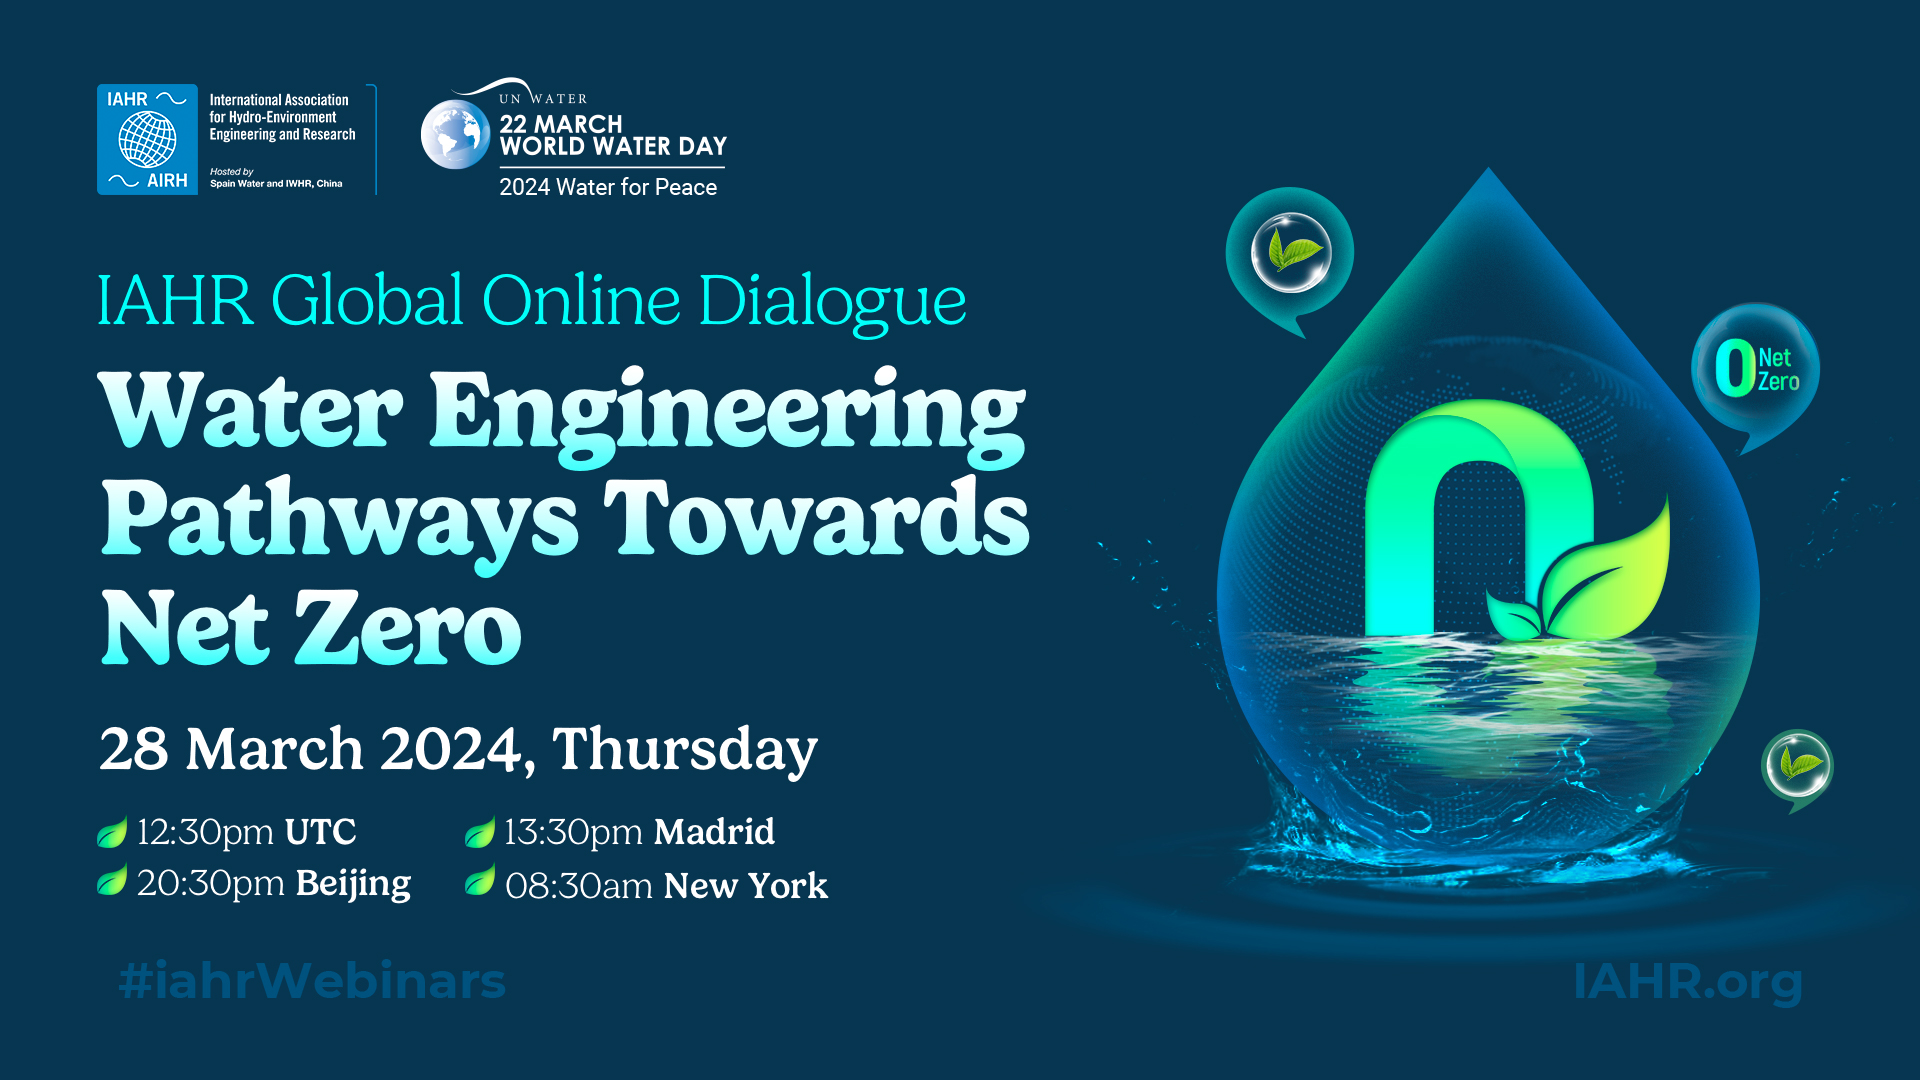 IAHR Global Online Dialogue on Water Engineering Pathways Towards Net Zero